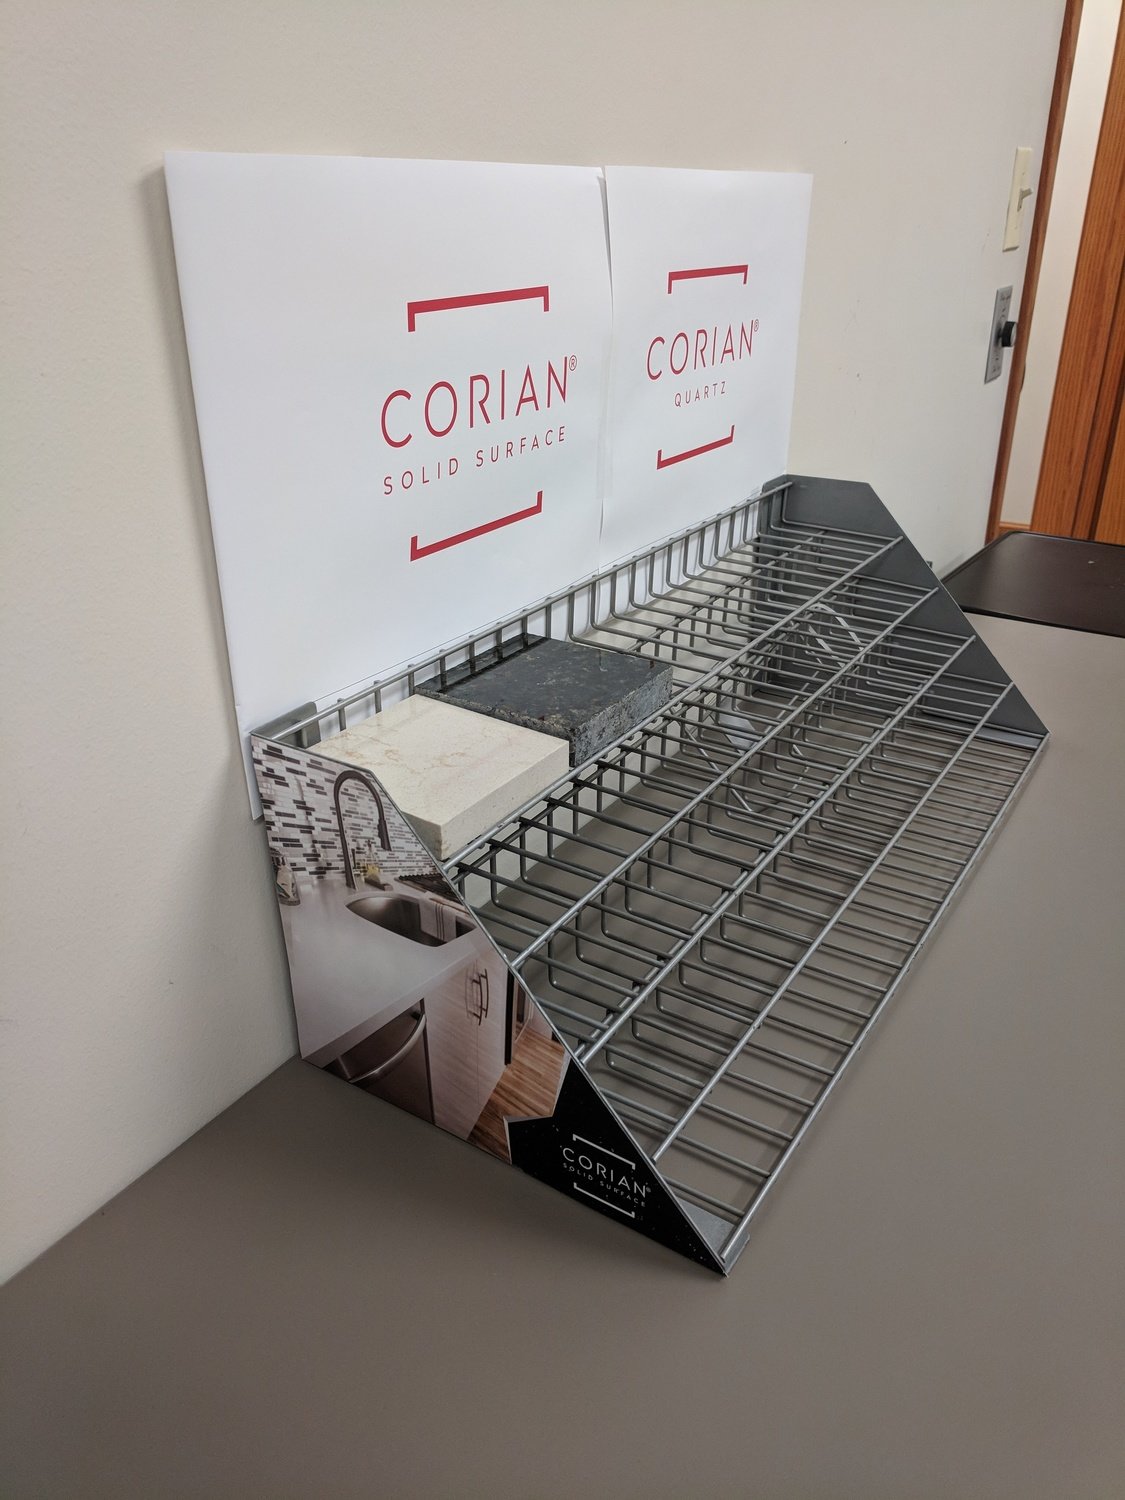 Corian Quartz Or Corian Solid Surface 4x4 Countertop Display W